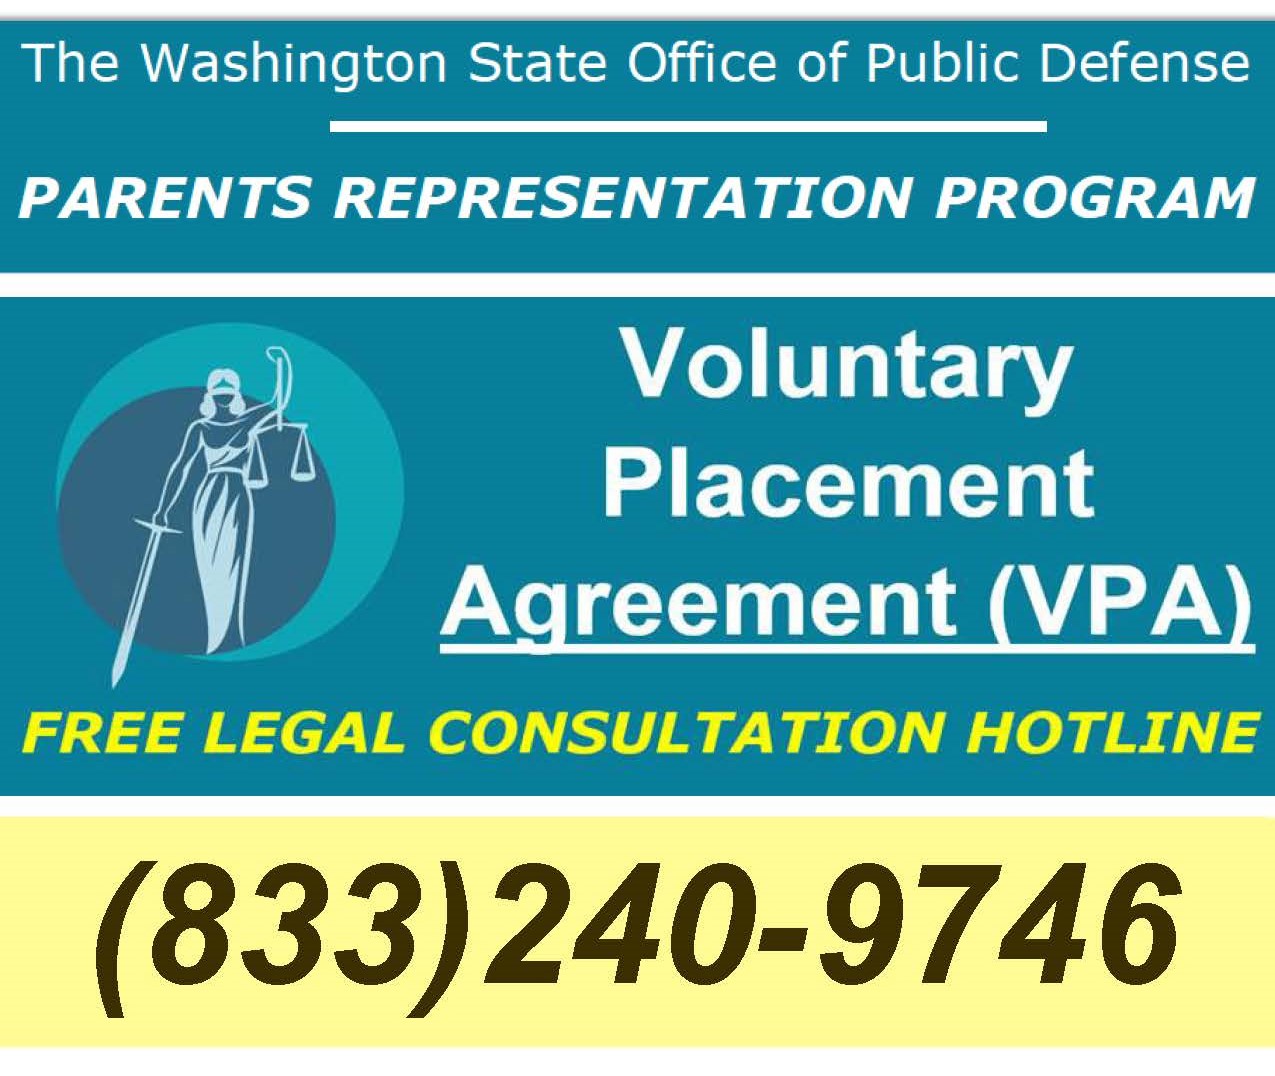 VPA Hotline (833) 240-9746